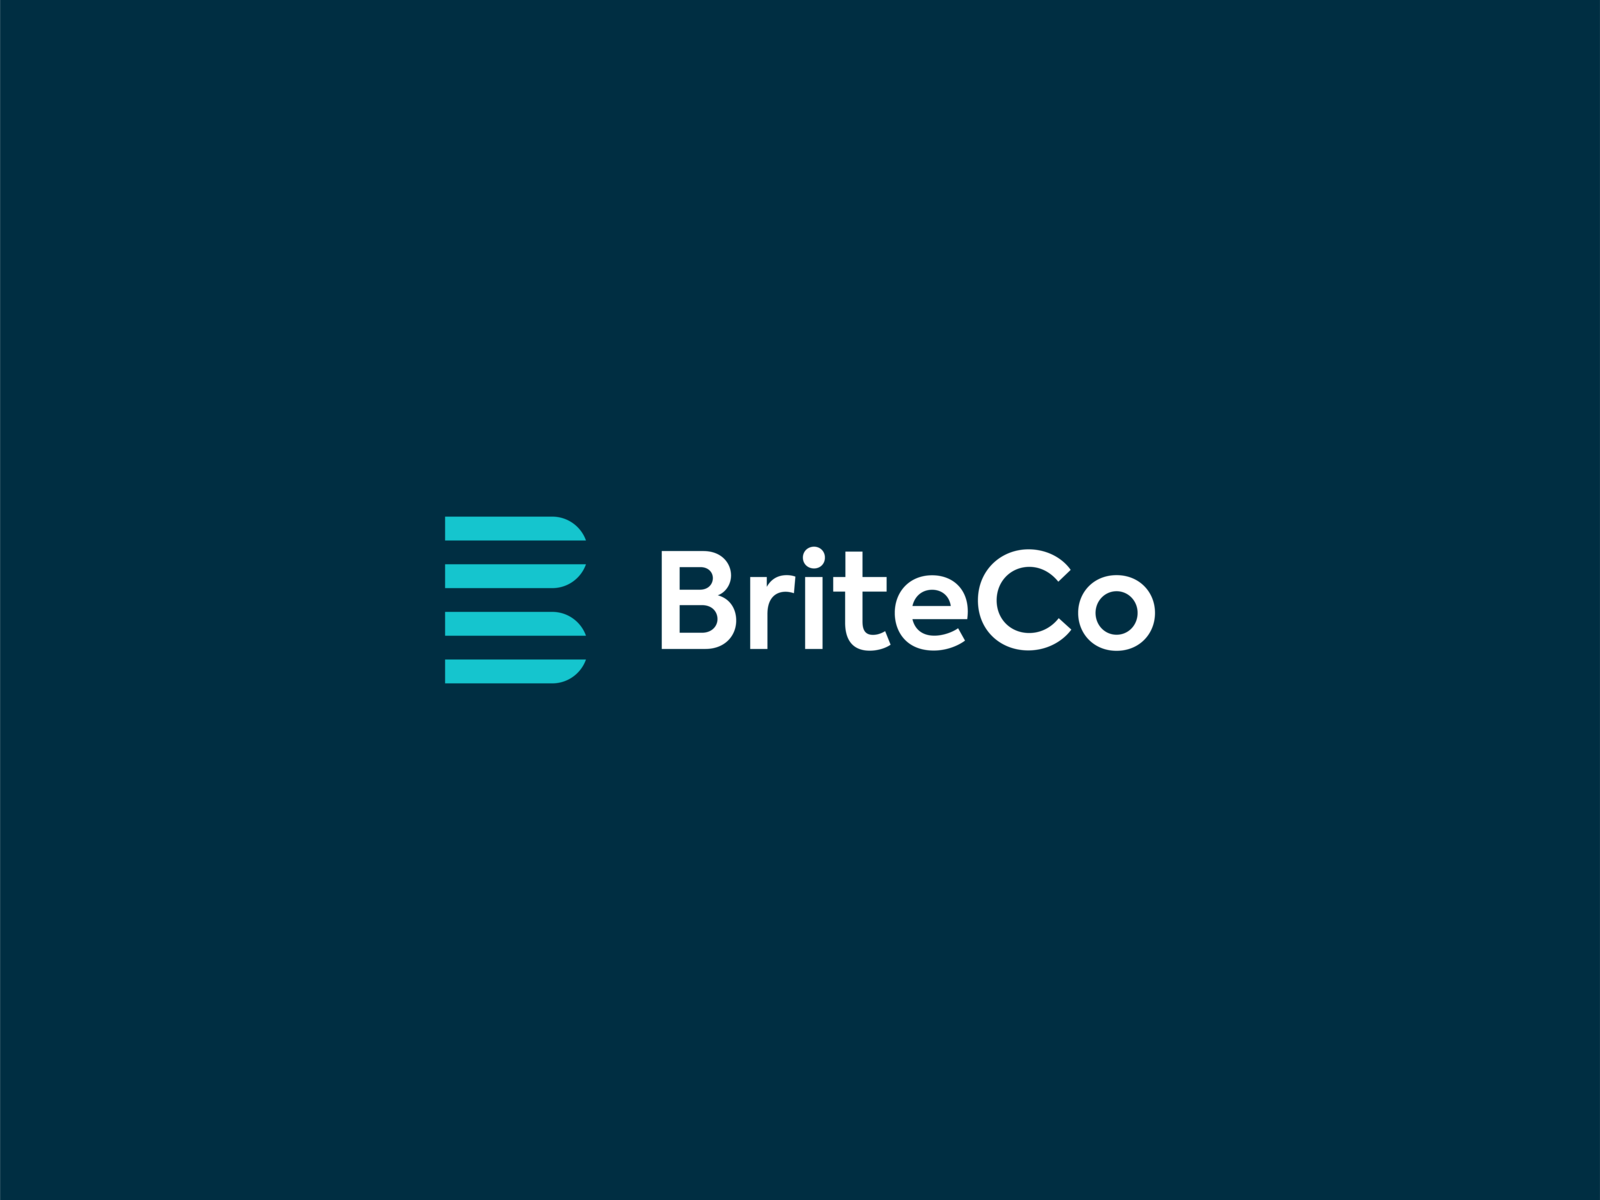 BriteCo Logo - Letter B by Hristijan Eftimov Logo Design on Dribbble